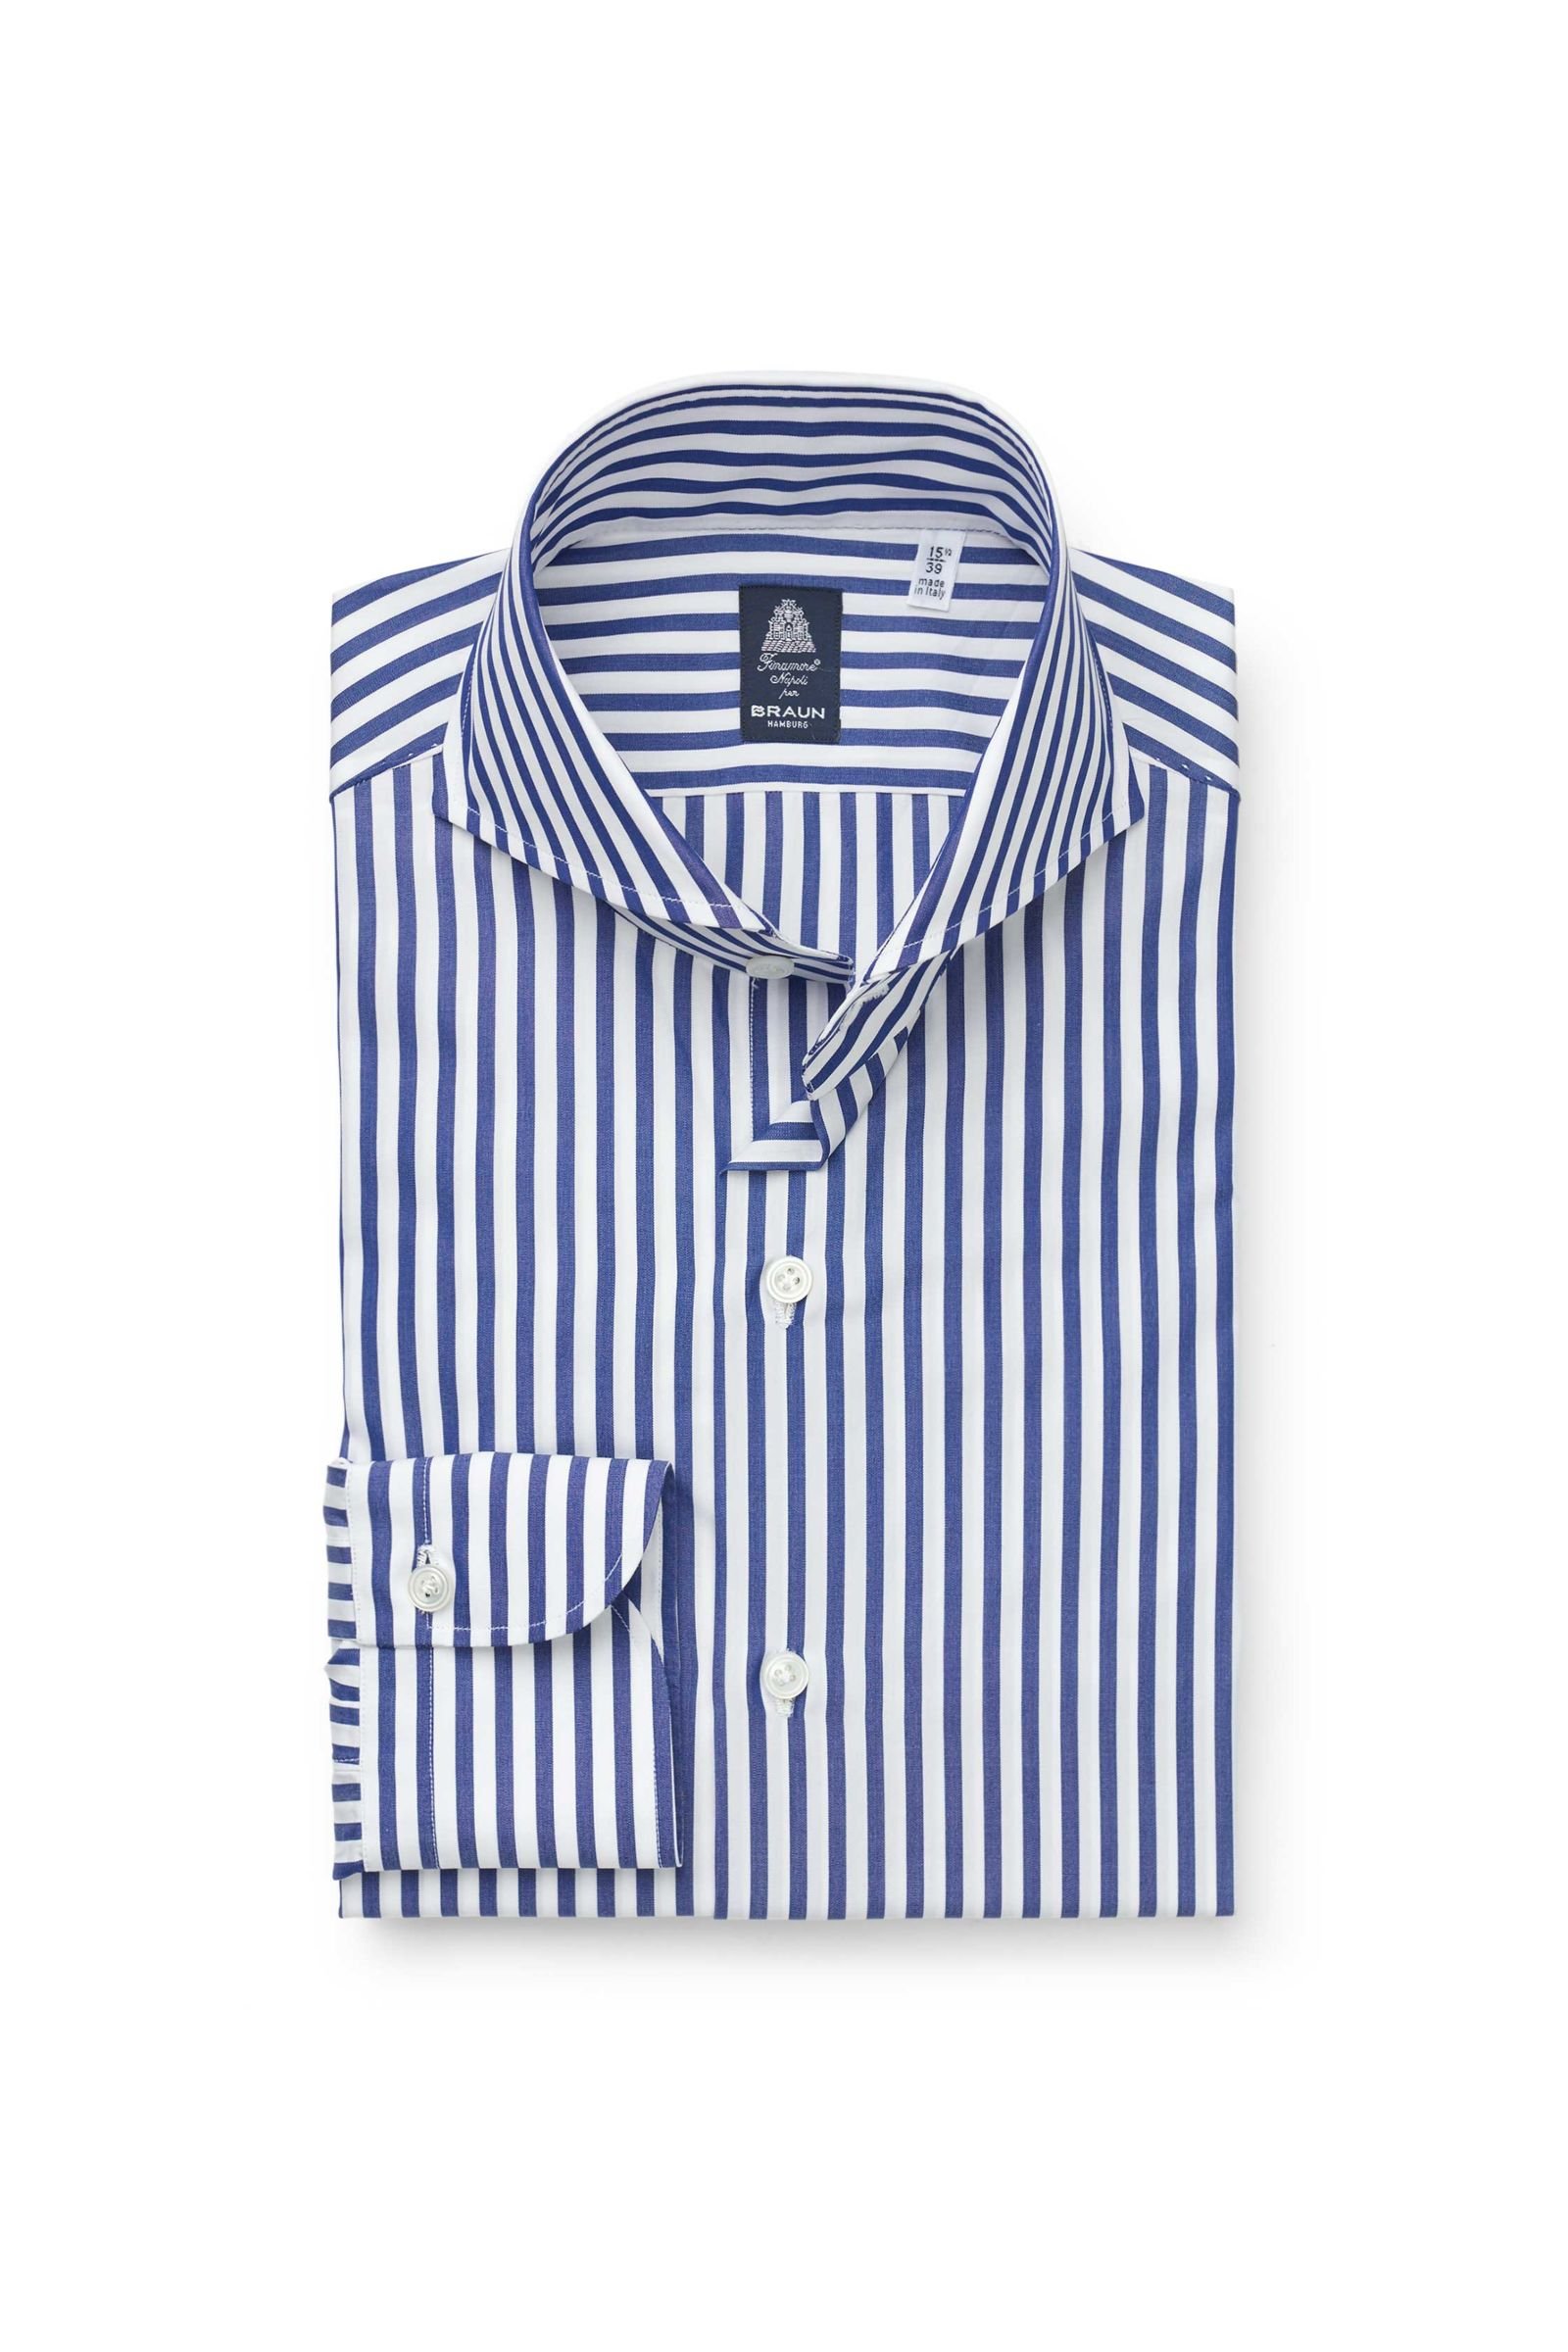 Business shirt 'Sergio Napoli' shark collar dark blue striped